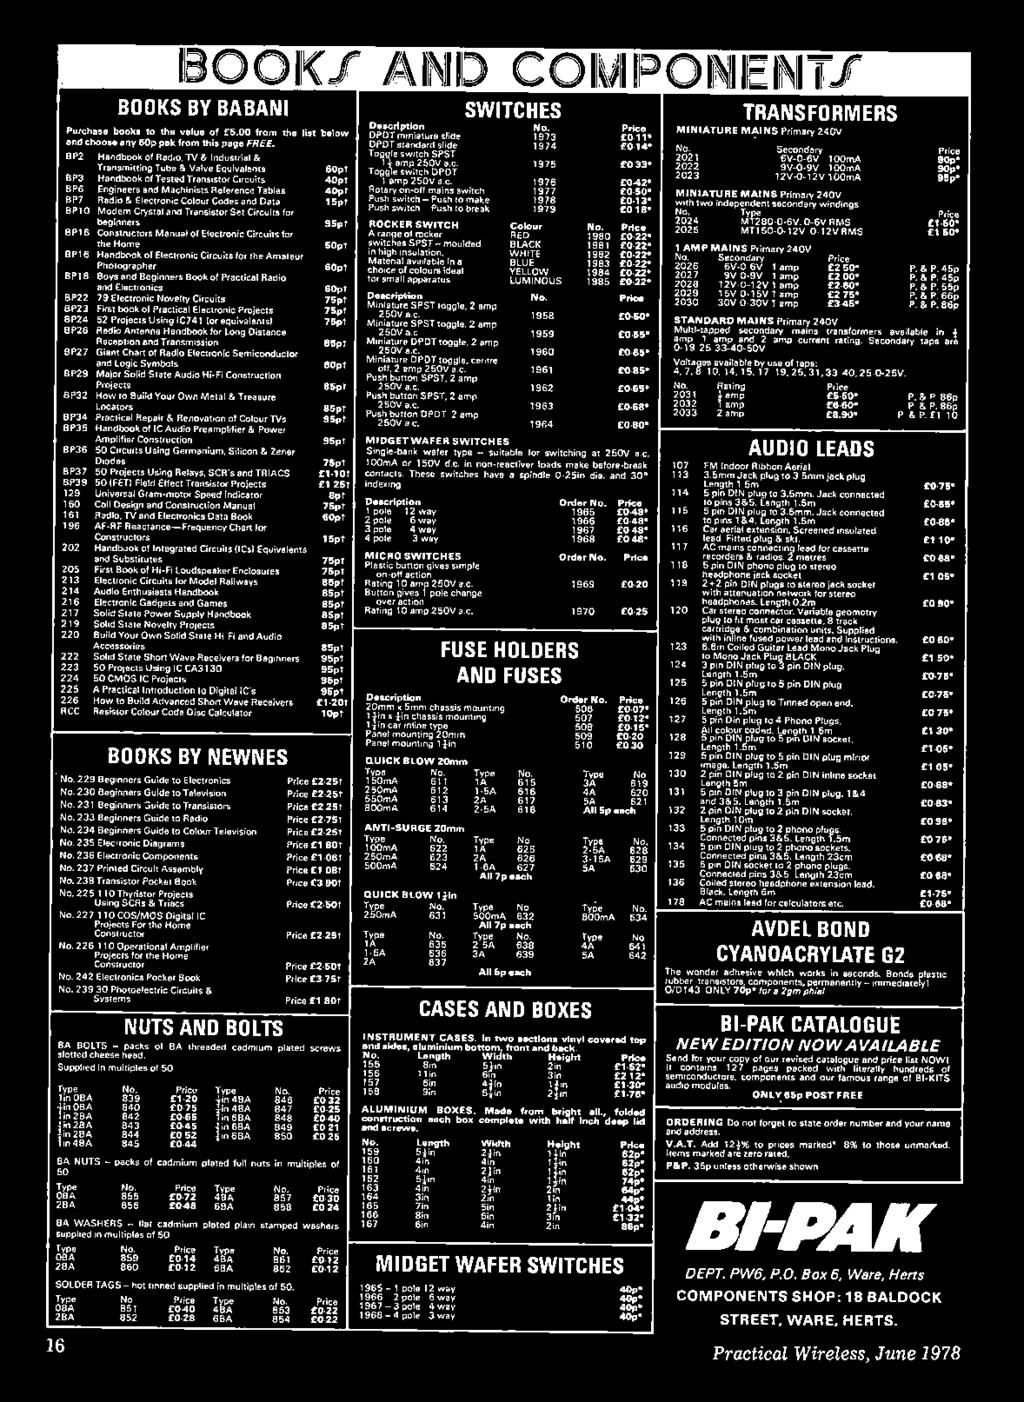 TV TV & ft ndustrial lodusirial & Transmitting TianamittioB Tube Tubn & Valve Valve Equivale"ts Eaulvalsoia 60pl BOpt BP3 BP3 Handbook Handbook of of Tested Teslod TranSistor Traoiistor Crcuits